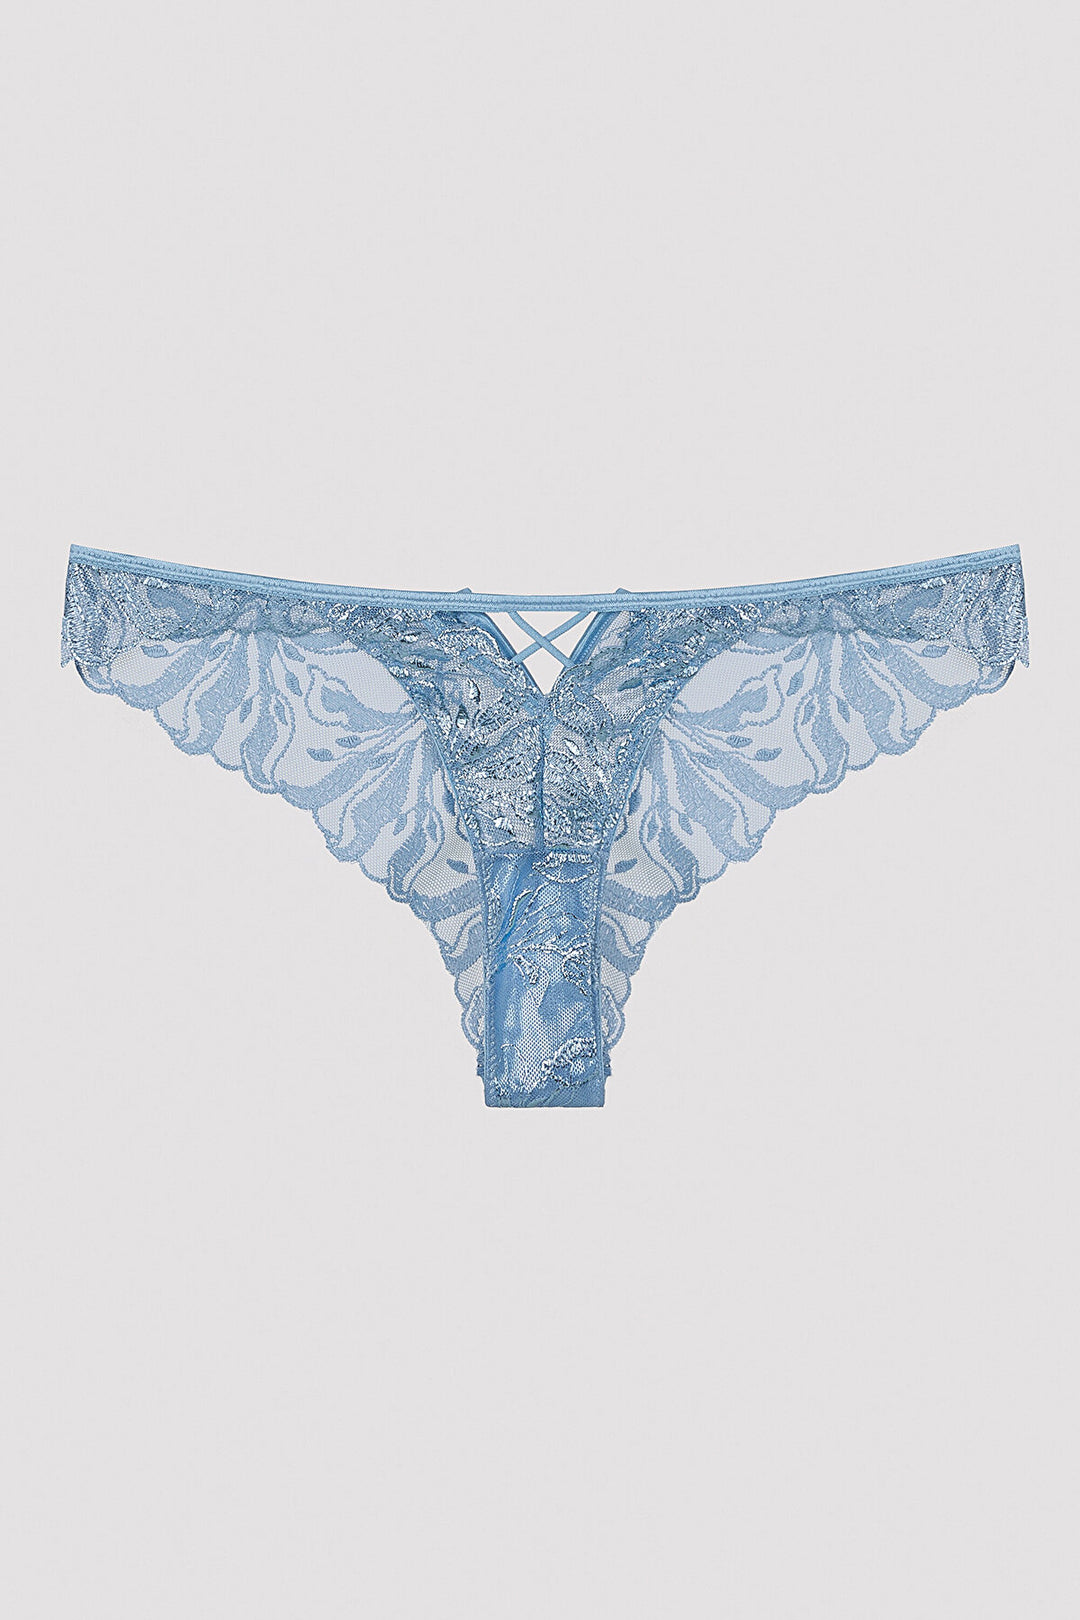 Allure Glittery V Cut Blue Brazilian Panties